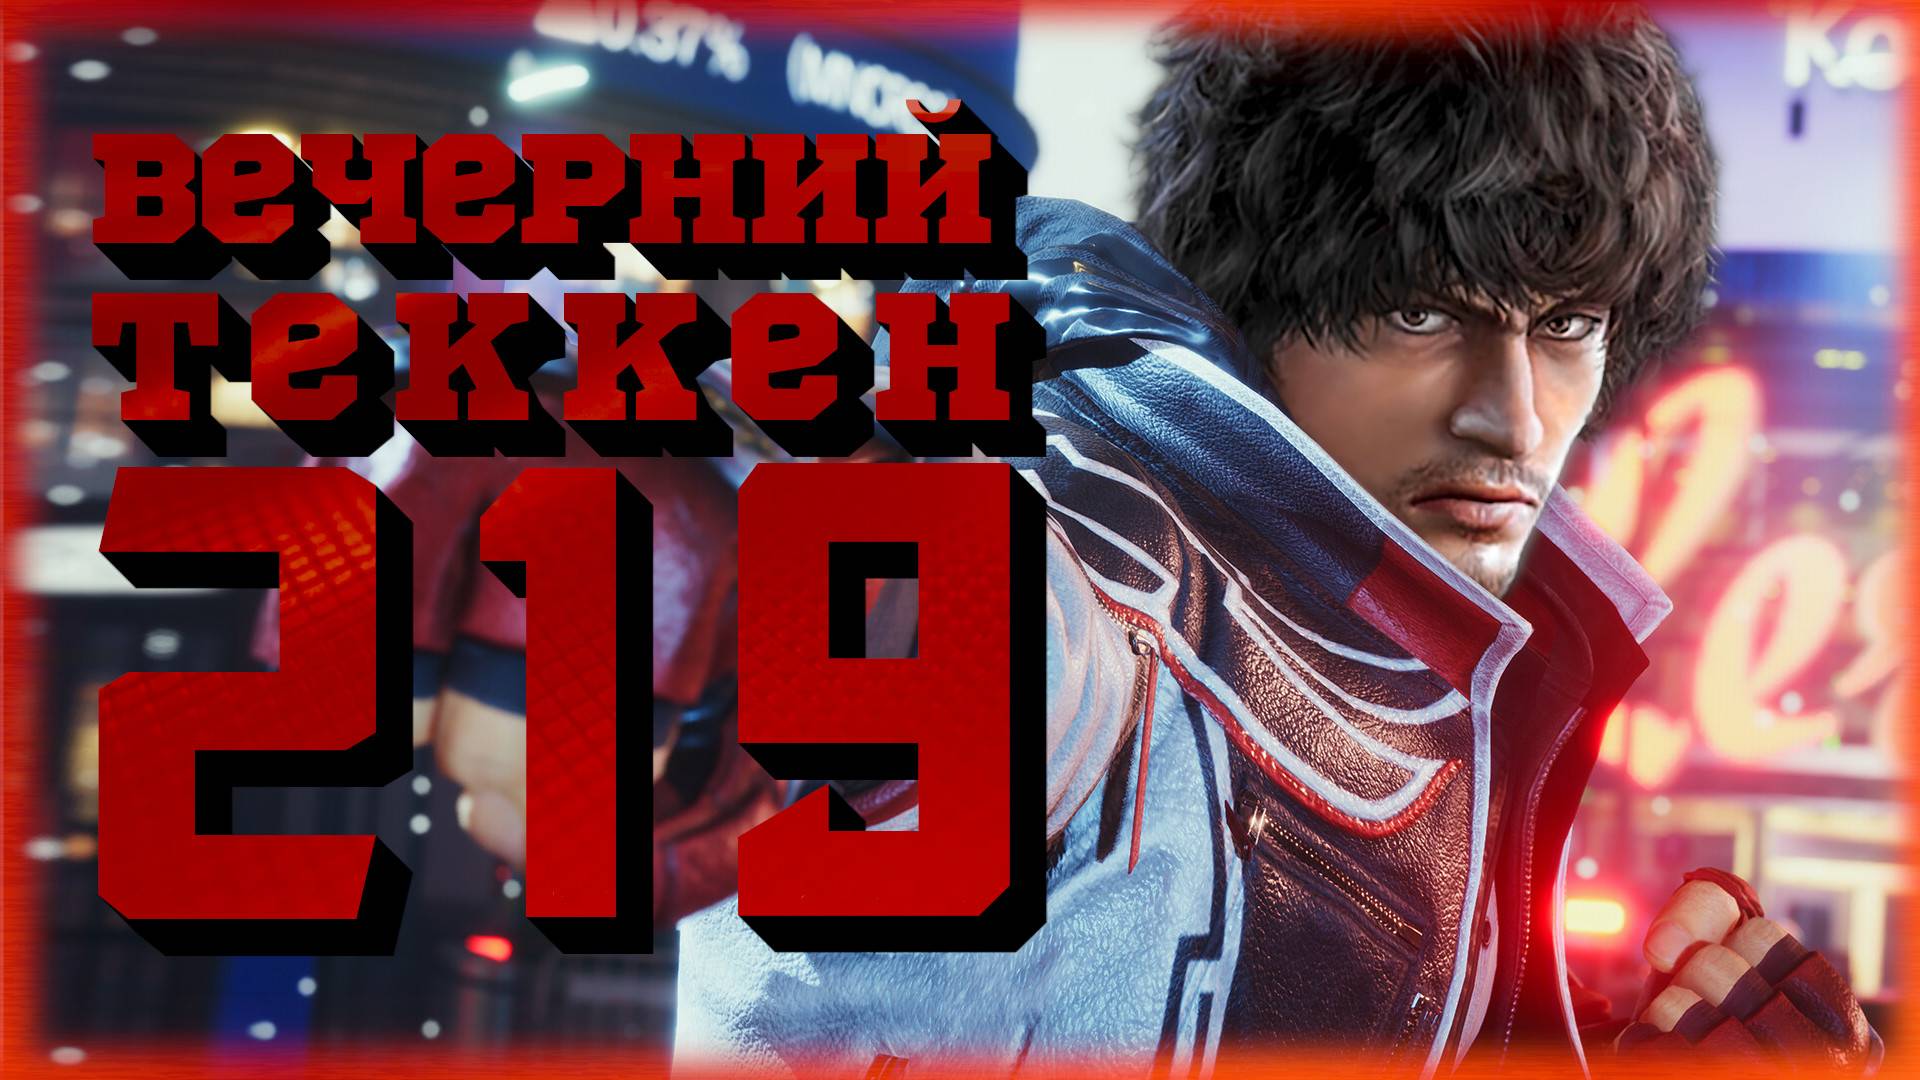 Вечерний Tekken! - С Днем Рождения, Виктор Робертович!